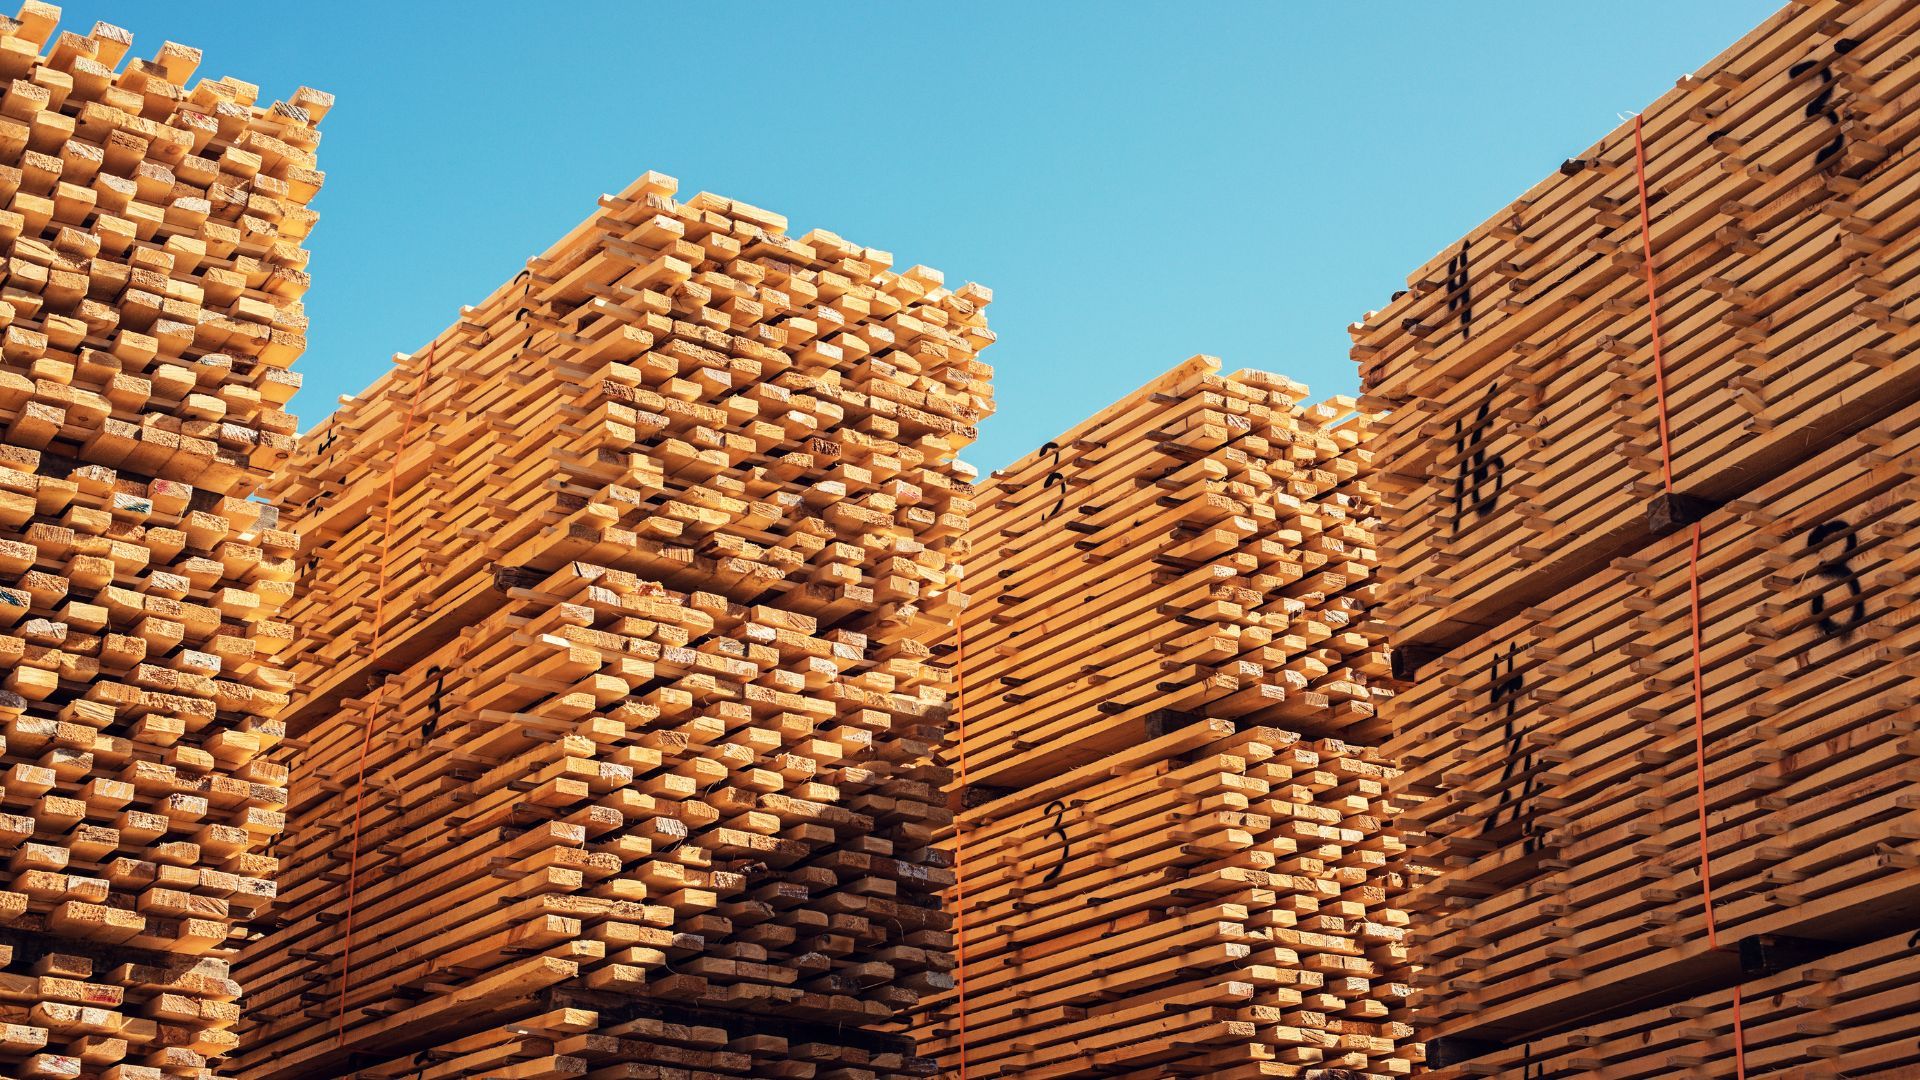 Lumber yard supply 